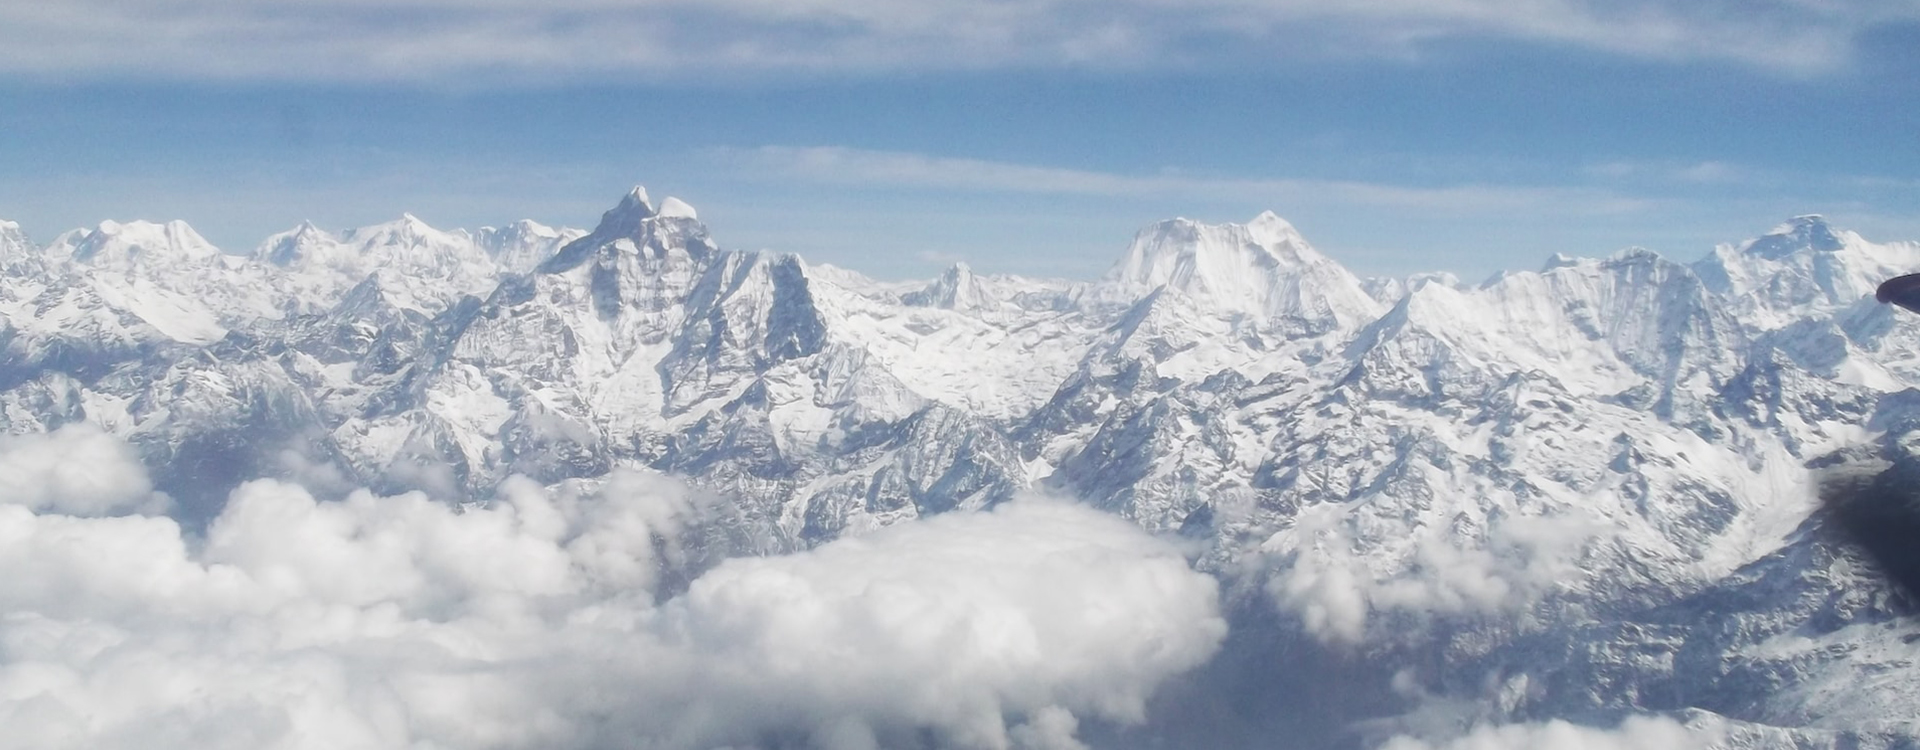 14 Highest Peaks in the World